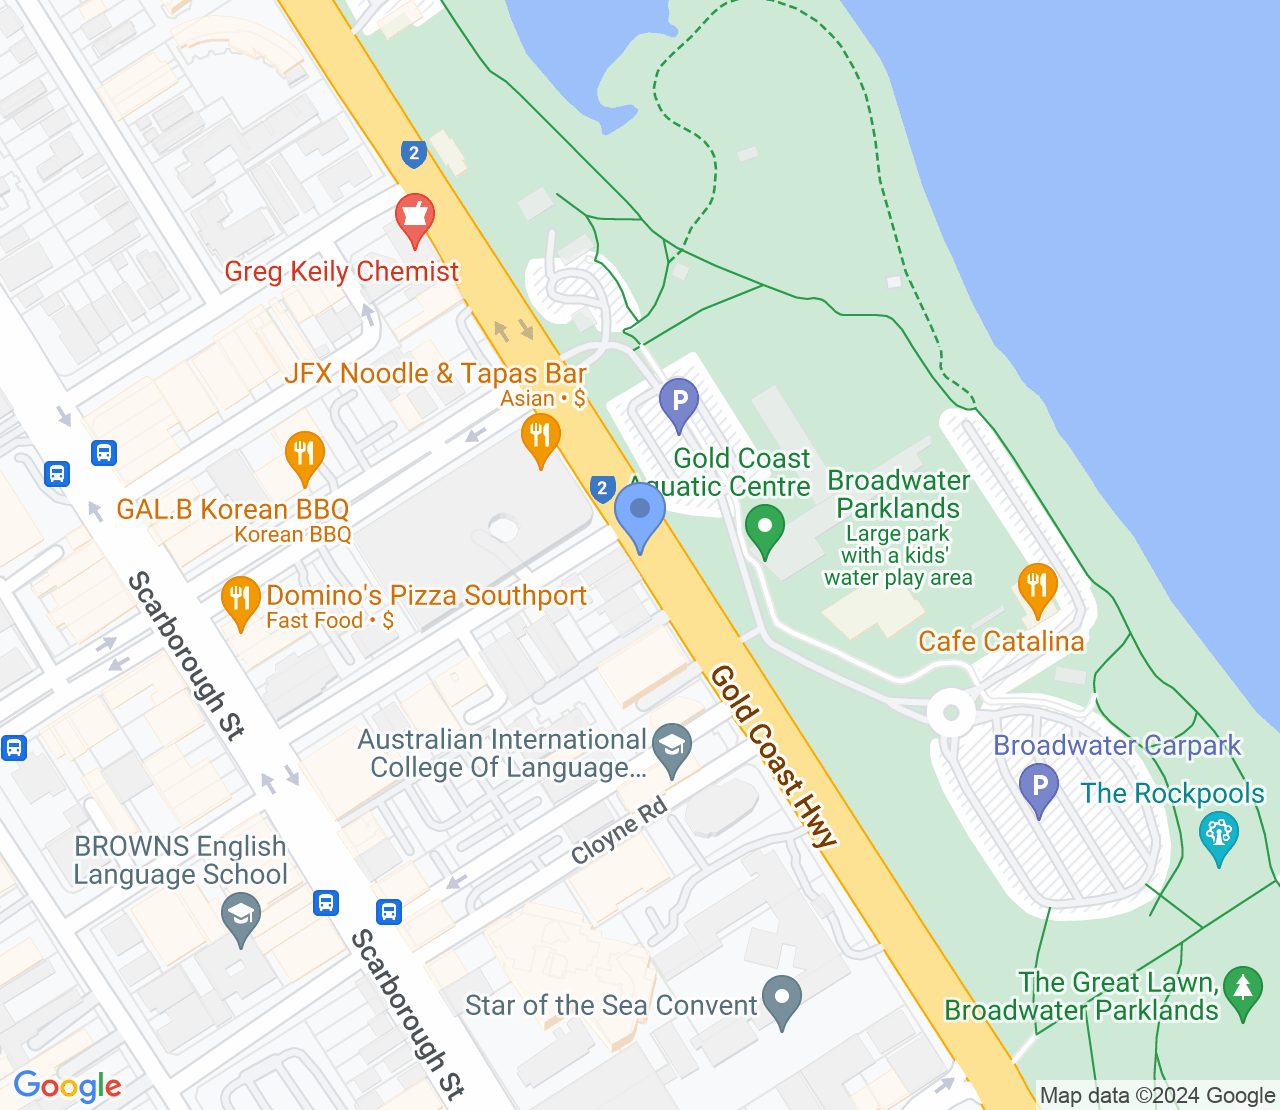 Google Maps image of Gold Coast Aquatic Centre